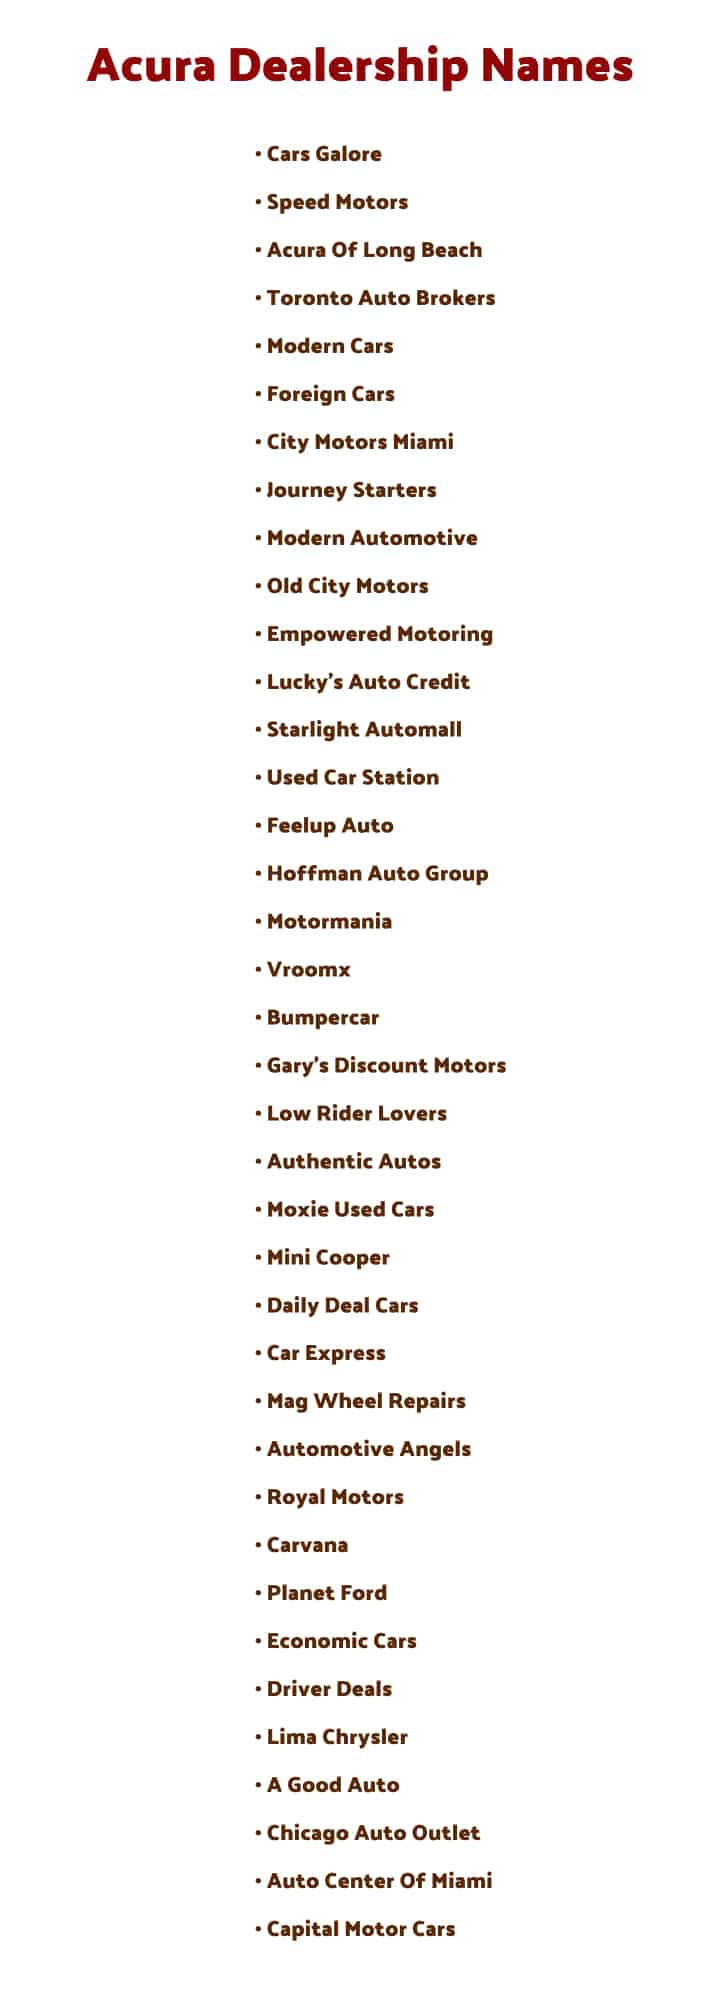 acura dealership names list